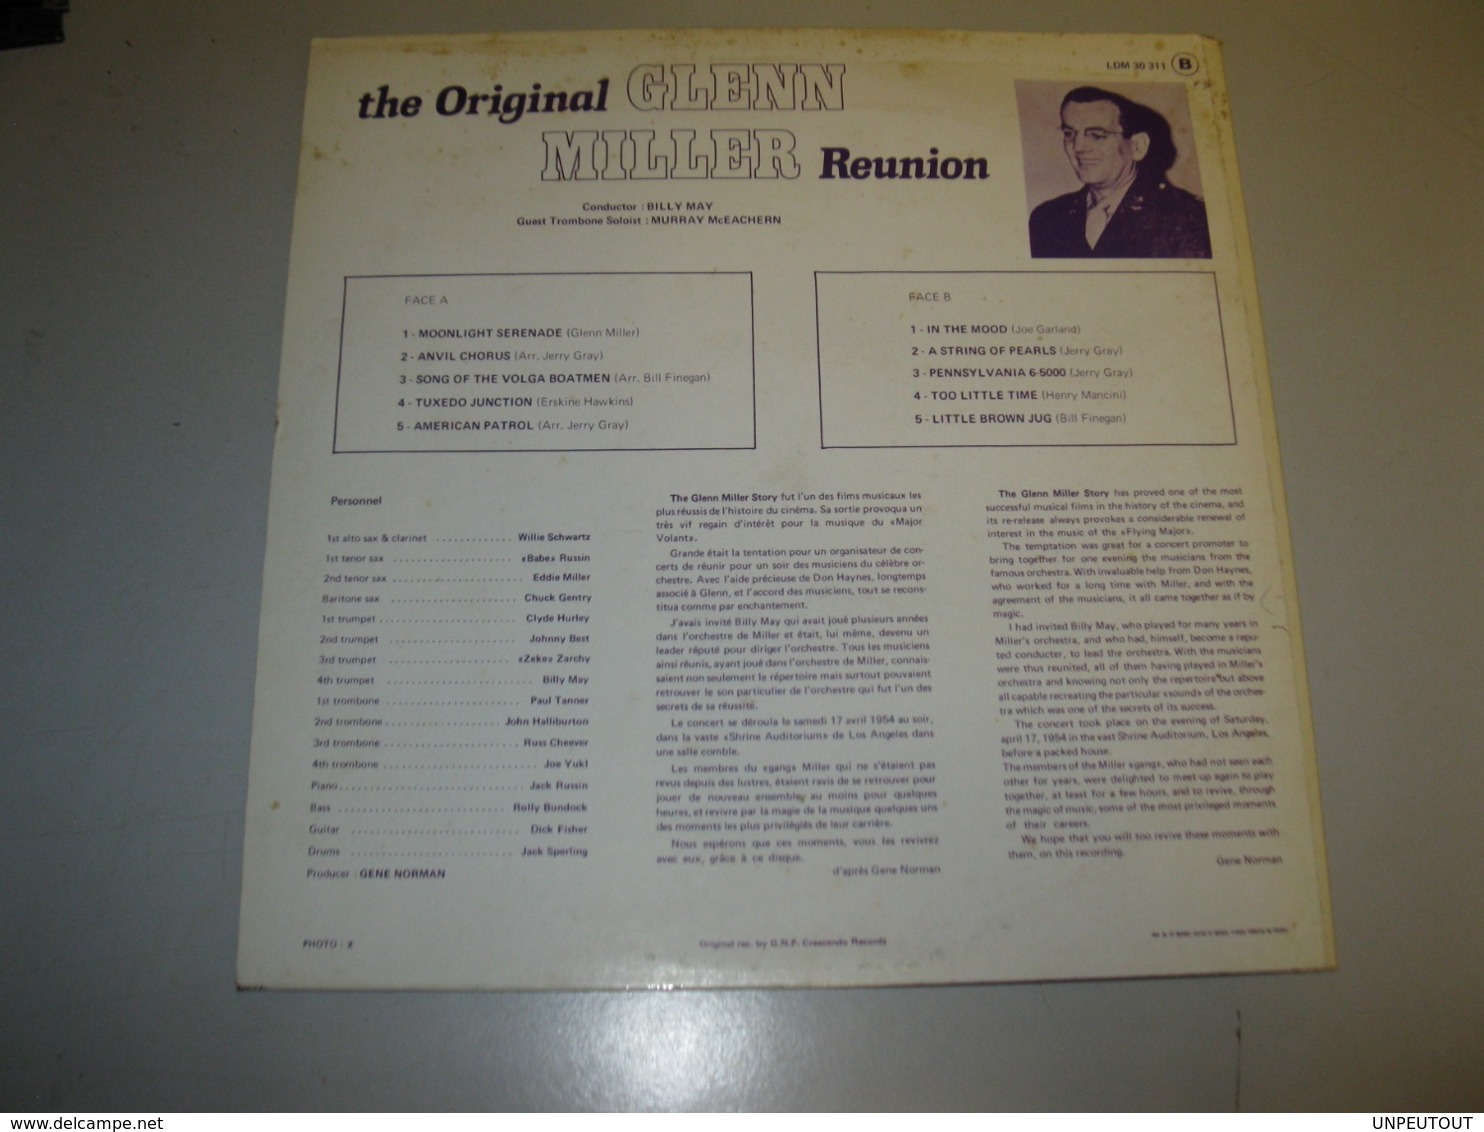 VINYLE "THE ORIGINAL GLENN MILLER REUNION" 33 T VOGUE (1976) - Jazz